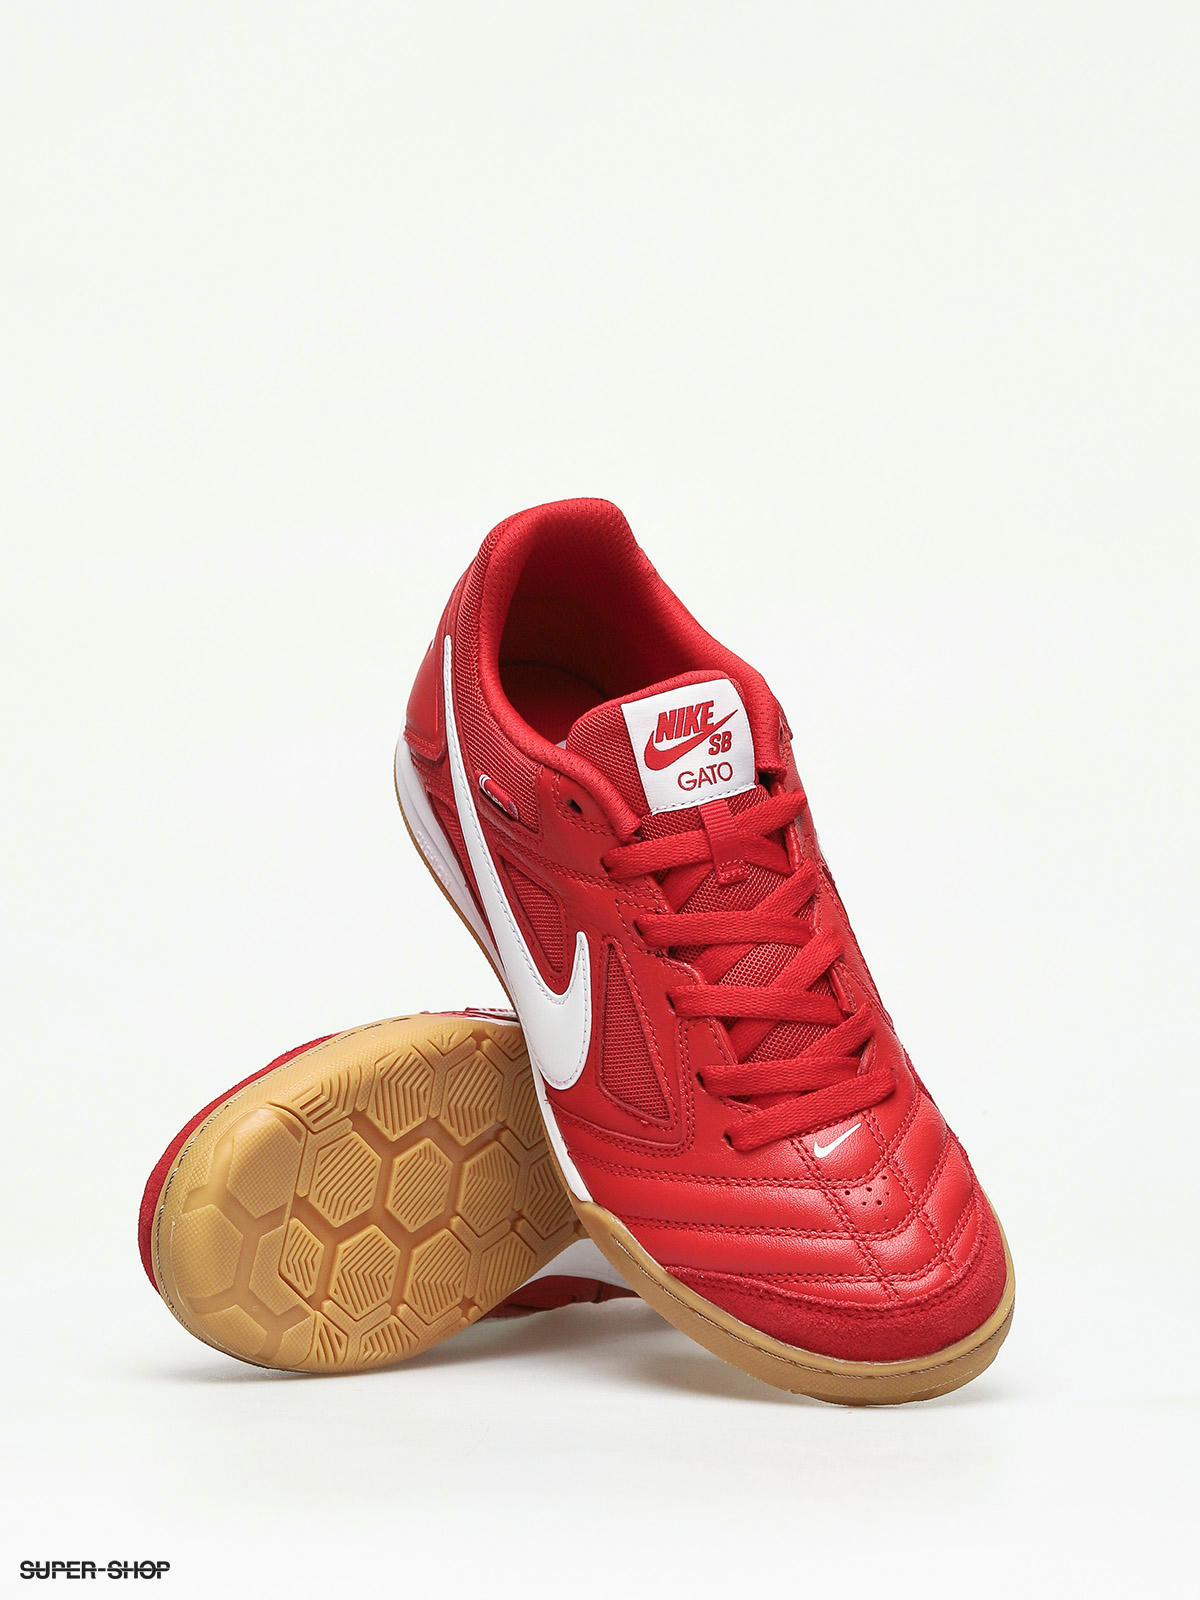 Nike SB Sb Gato Shoes (university red 